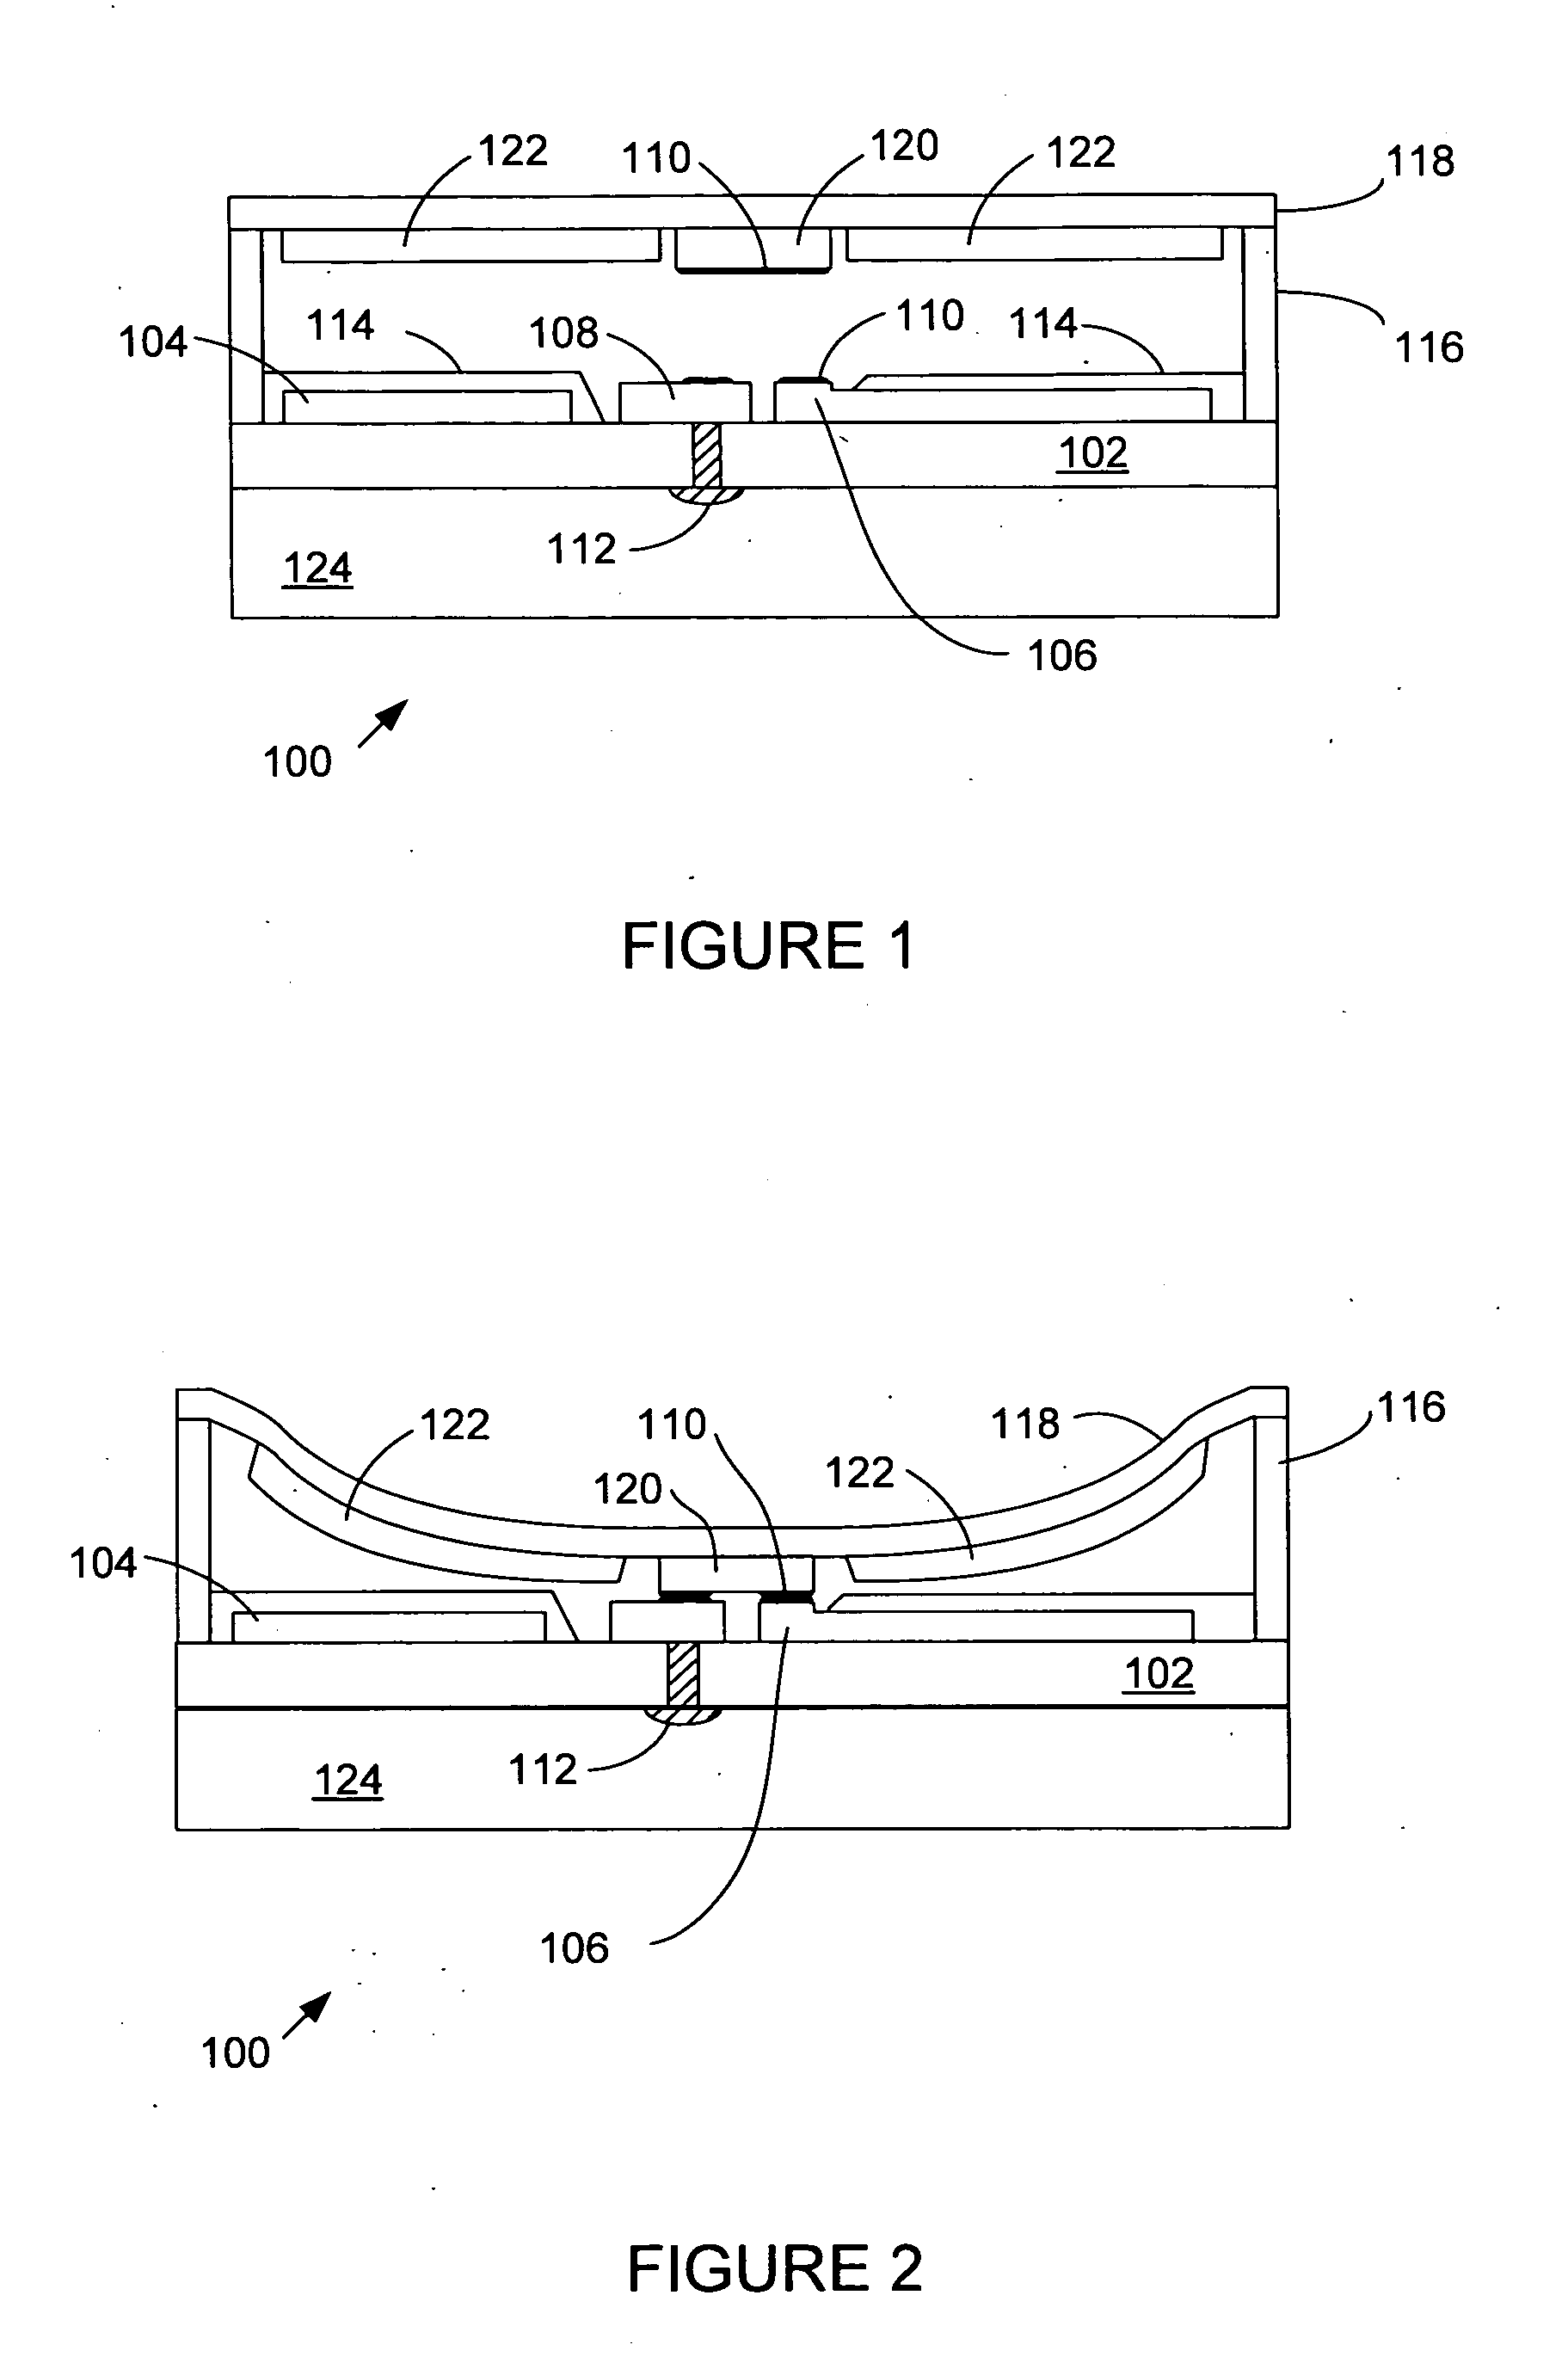 Micro-electromechanical switching backplane